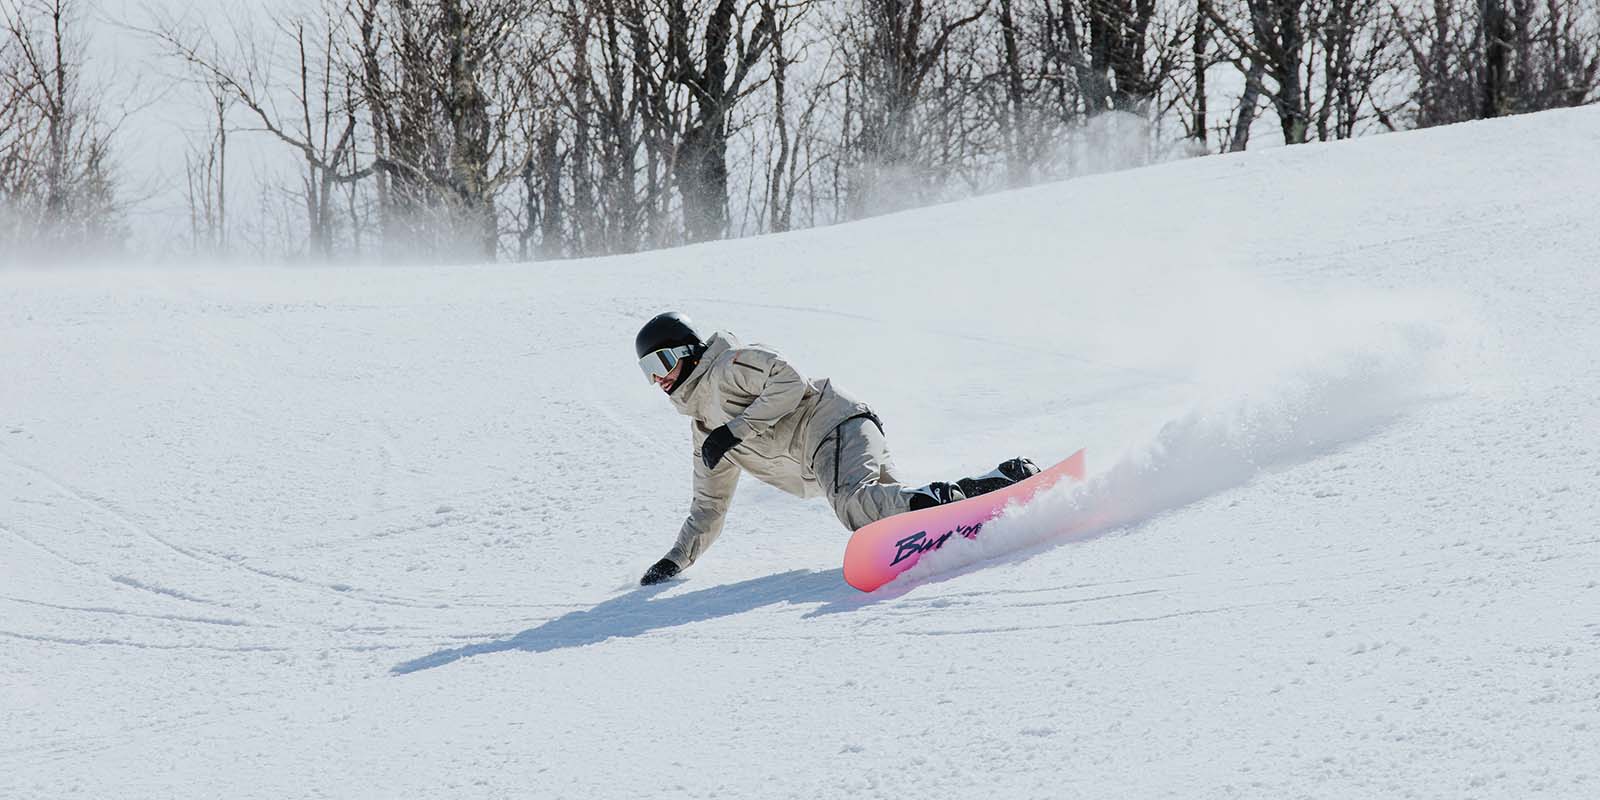 The Ski Monster, TSM, snowboarding, snowboards, Burton, Sunapee, winter, snow